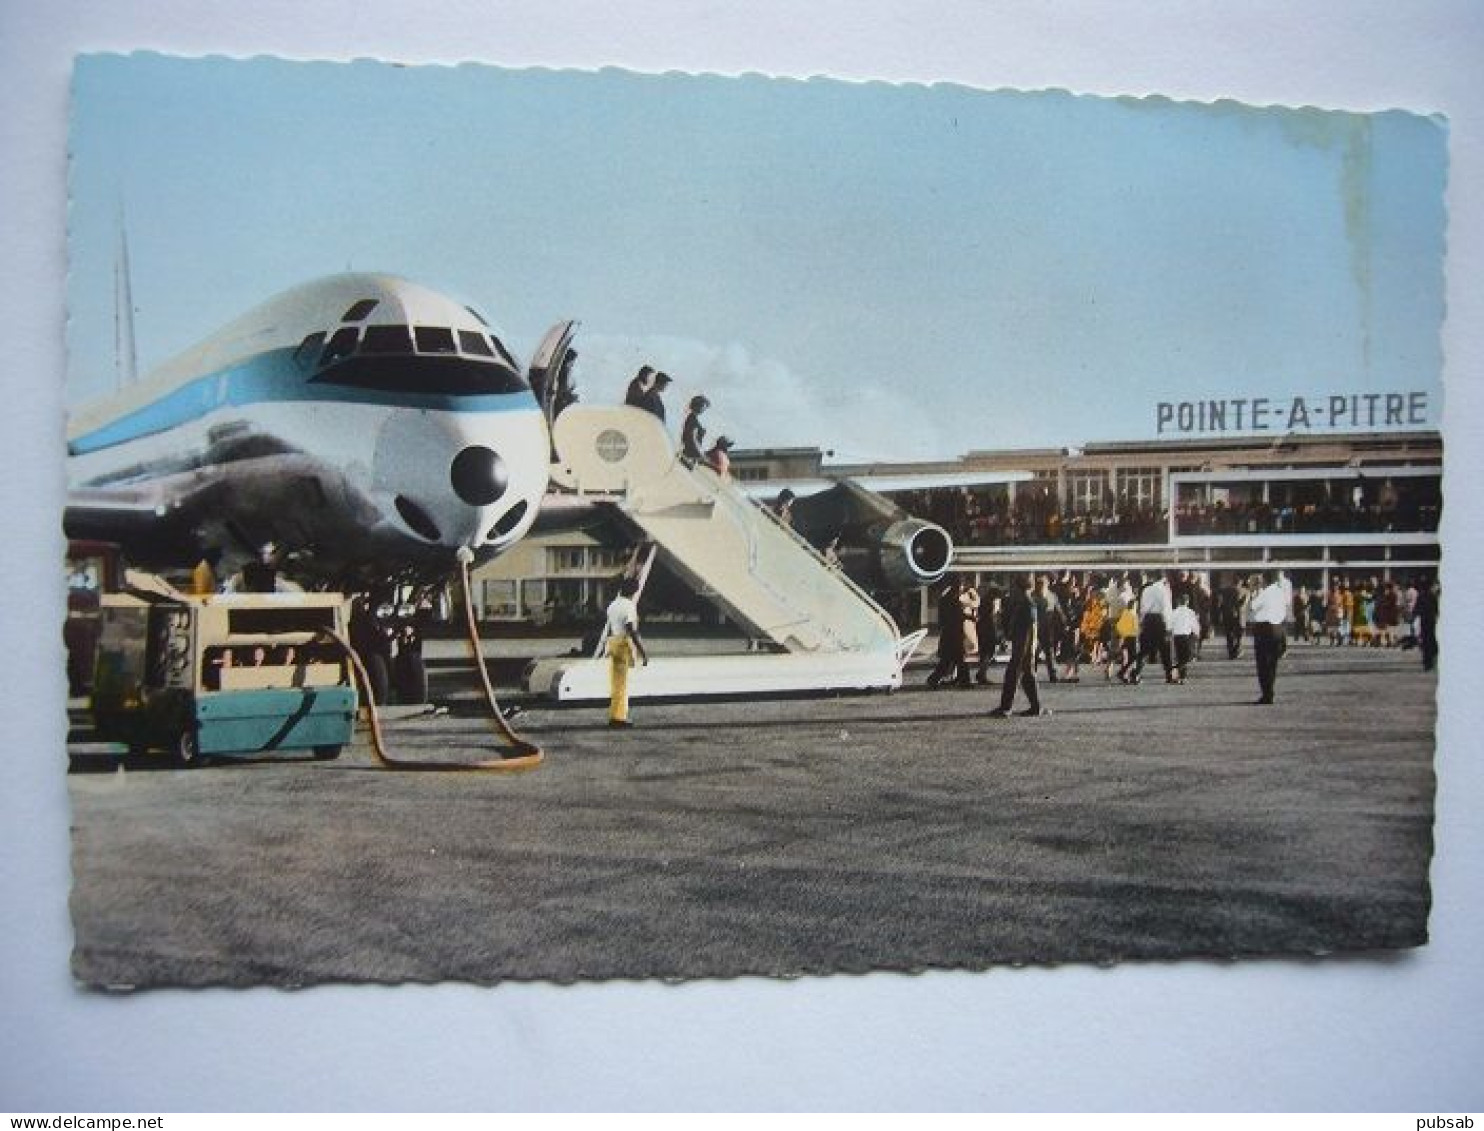 Avion / Airplane / PAN AM - PAN AMERICAN AIRWAYS / DC-8 / Seen At Raizet Airport, Pointe-à-Pitre - Guadeloupe - Aérodromes